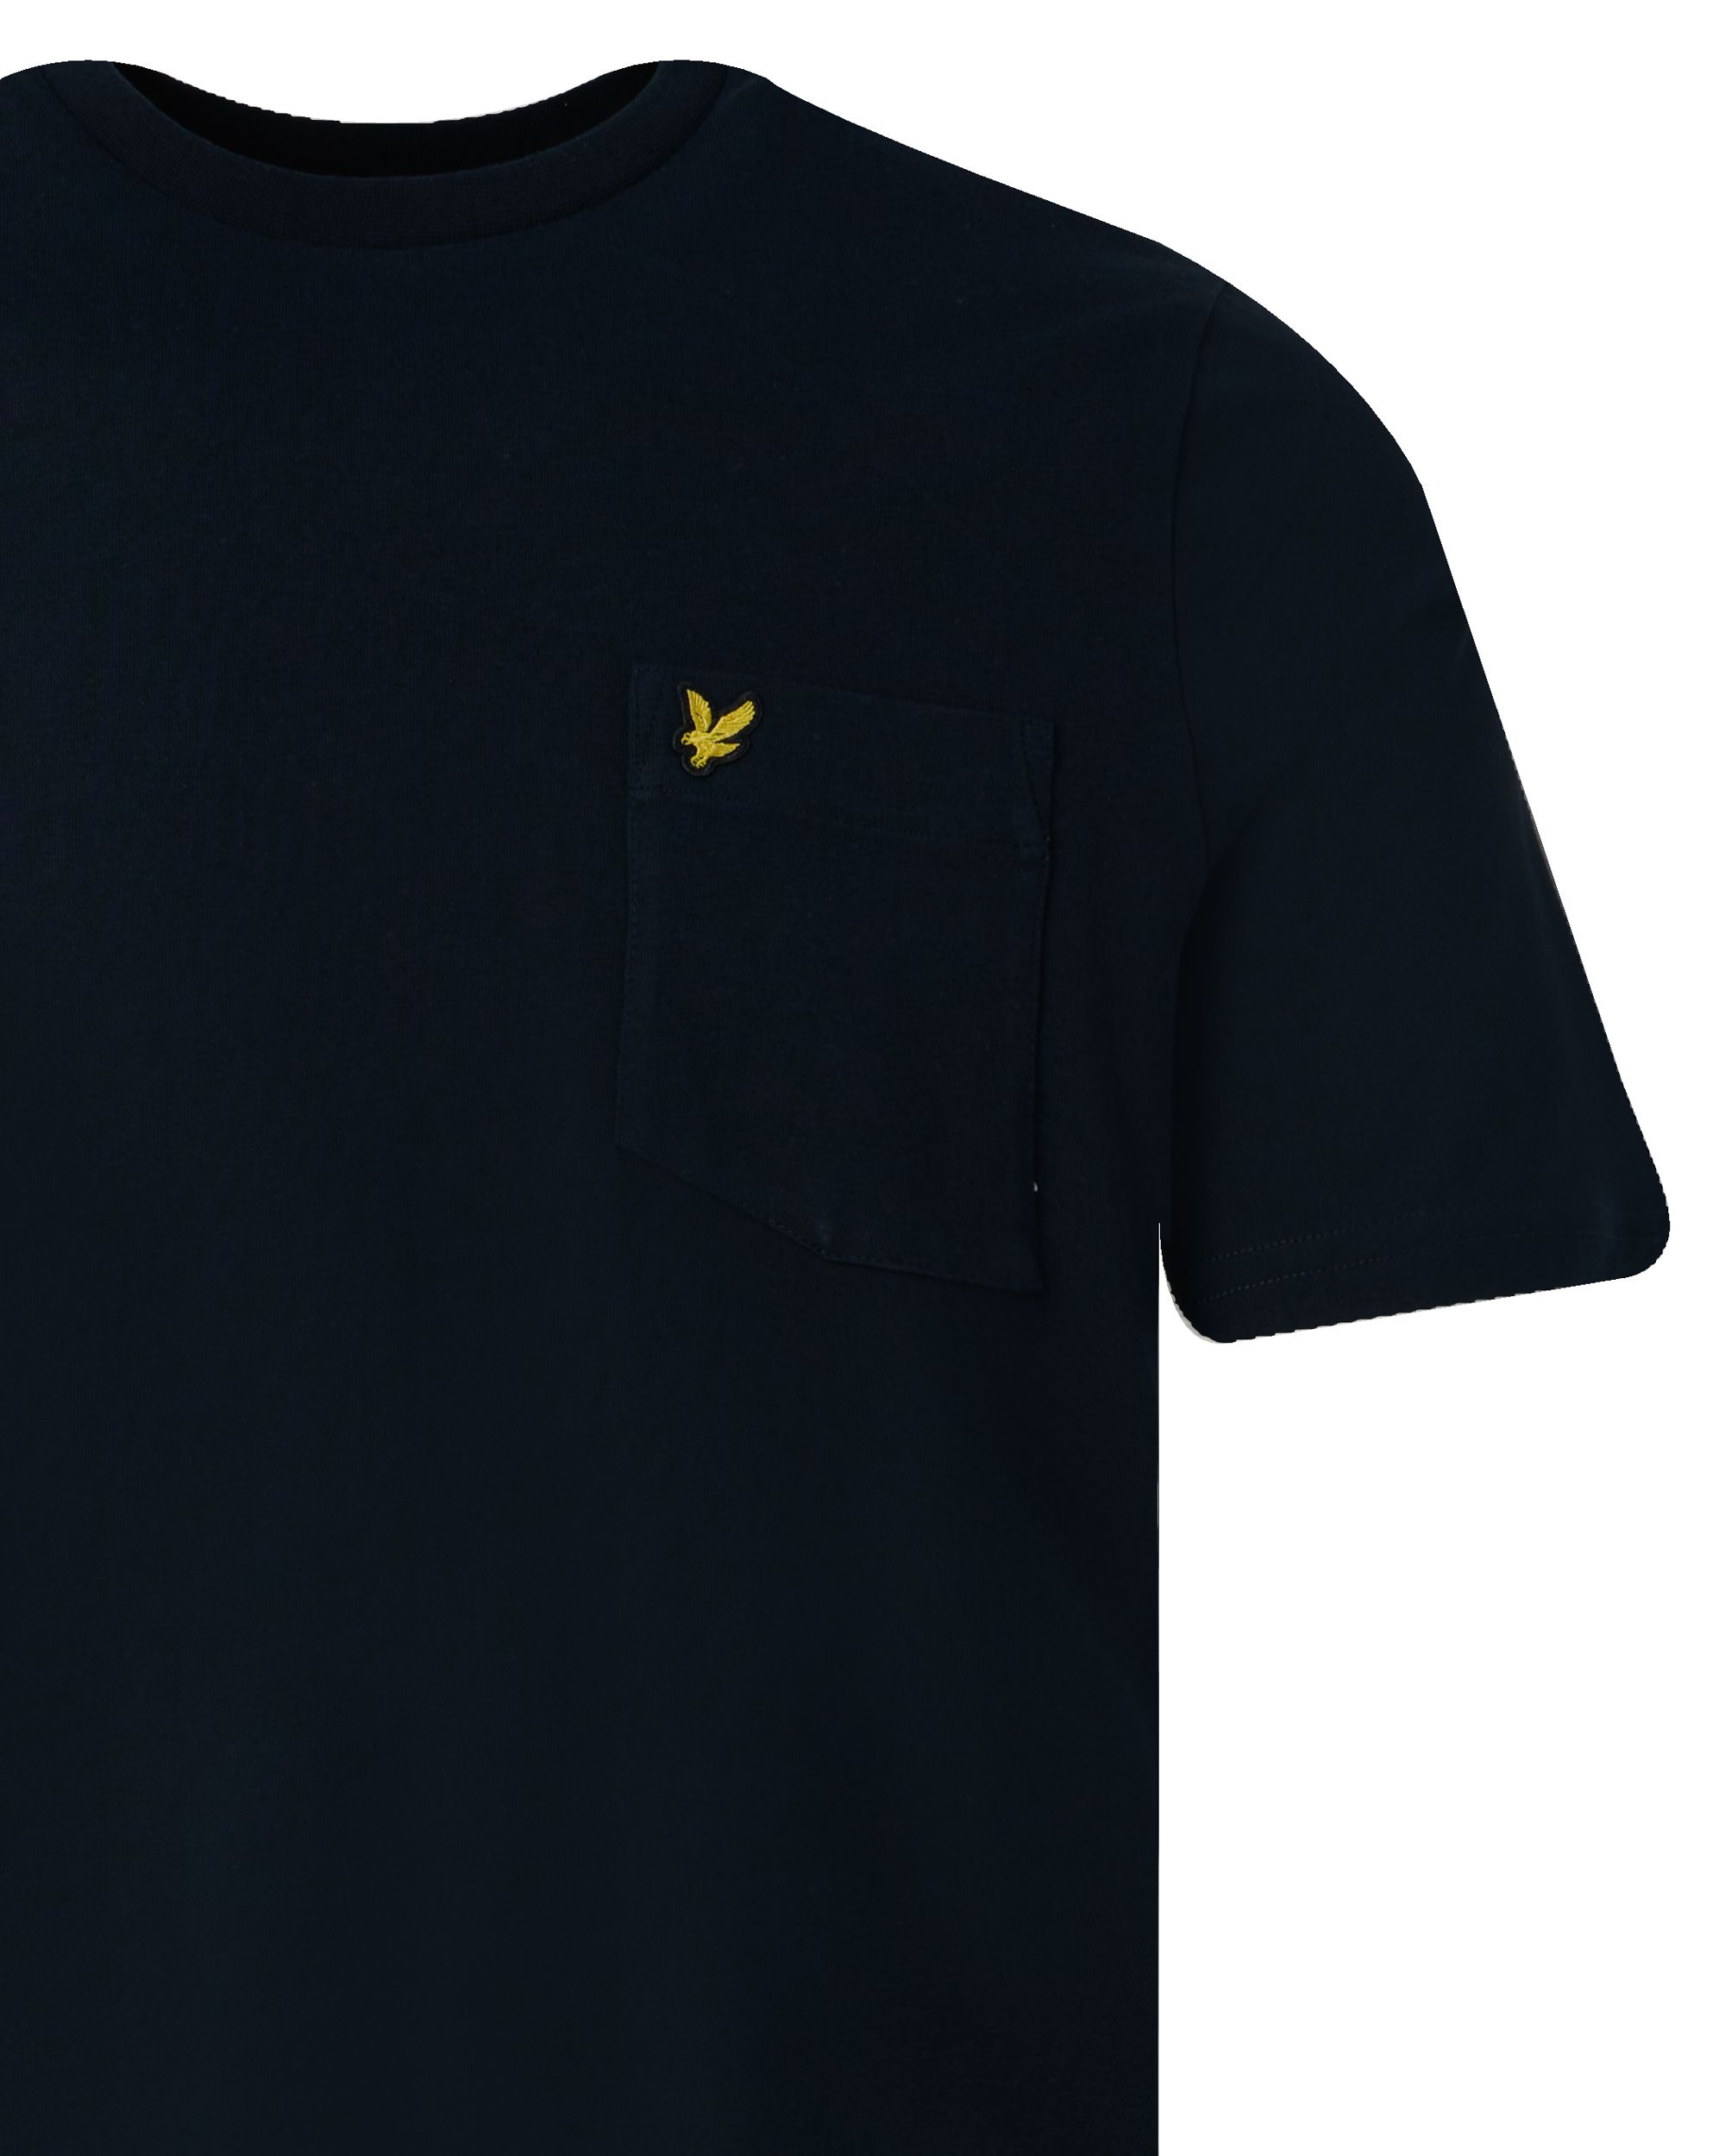 Lyle & Scott T-shirt KM Donker blauw 095445-001-L